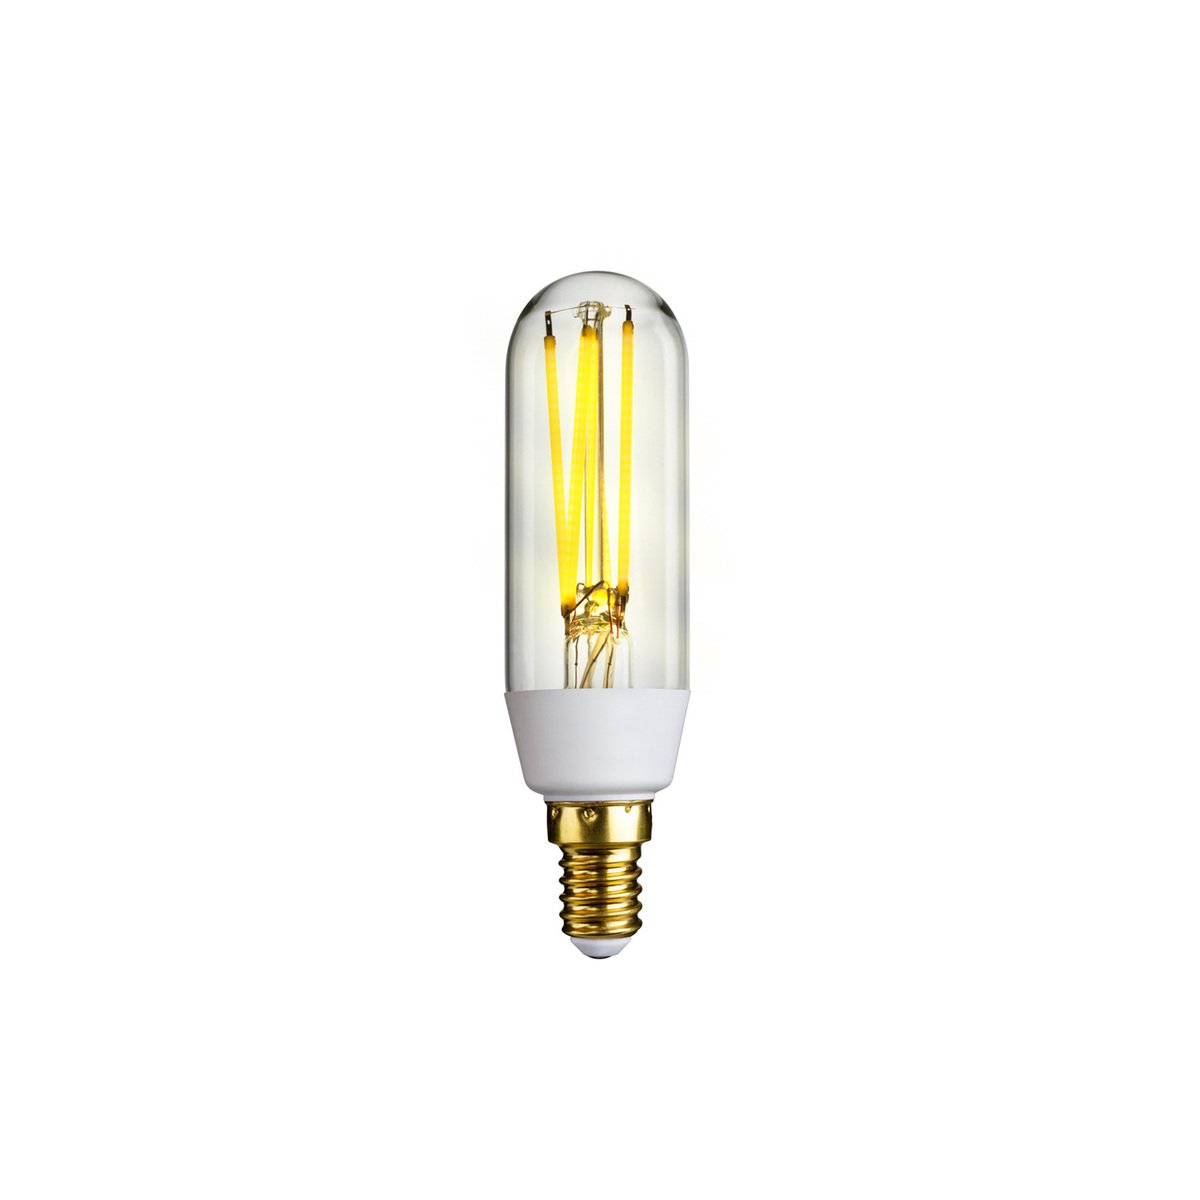 14 x Energy saving bulbs LUMINEUX 7W 3500K  E27 Thumbelina Spiral Bulbs 